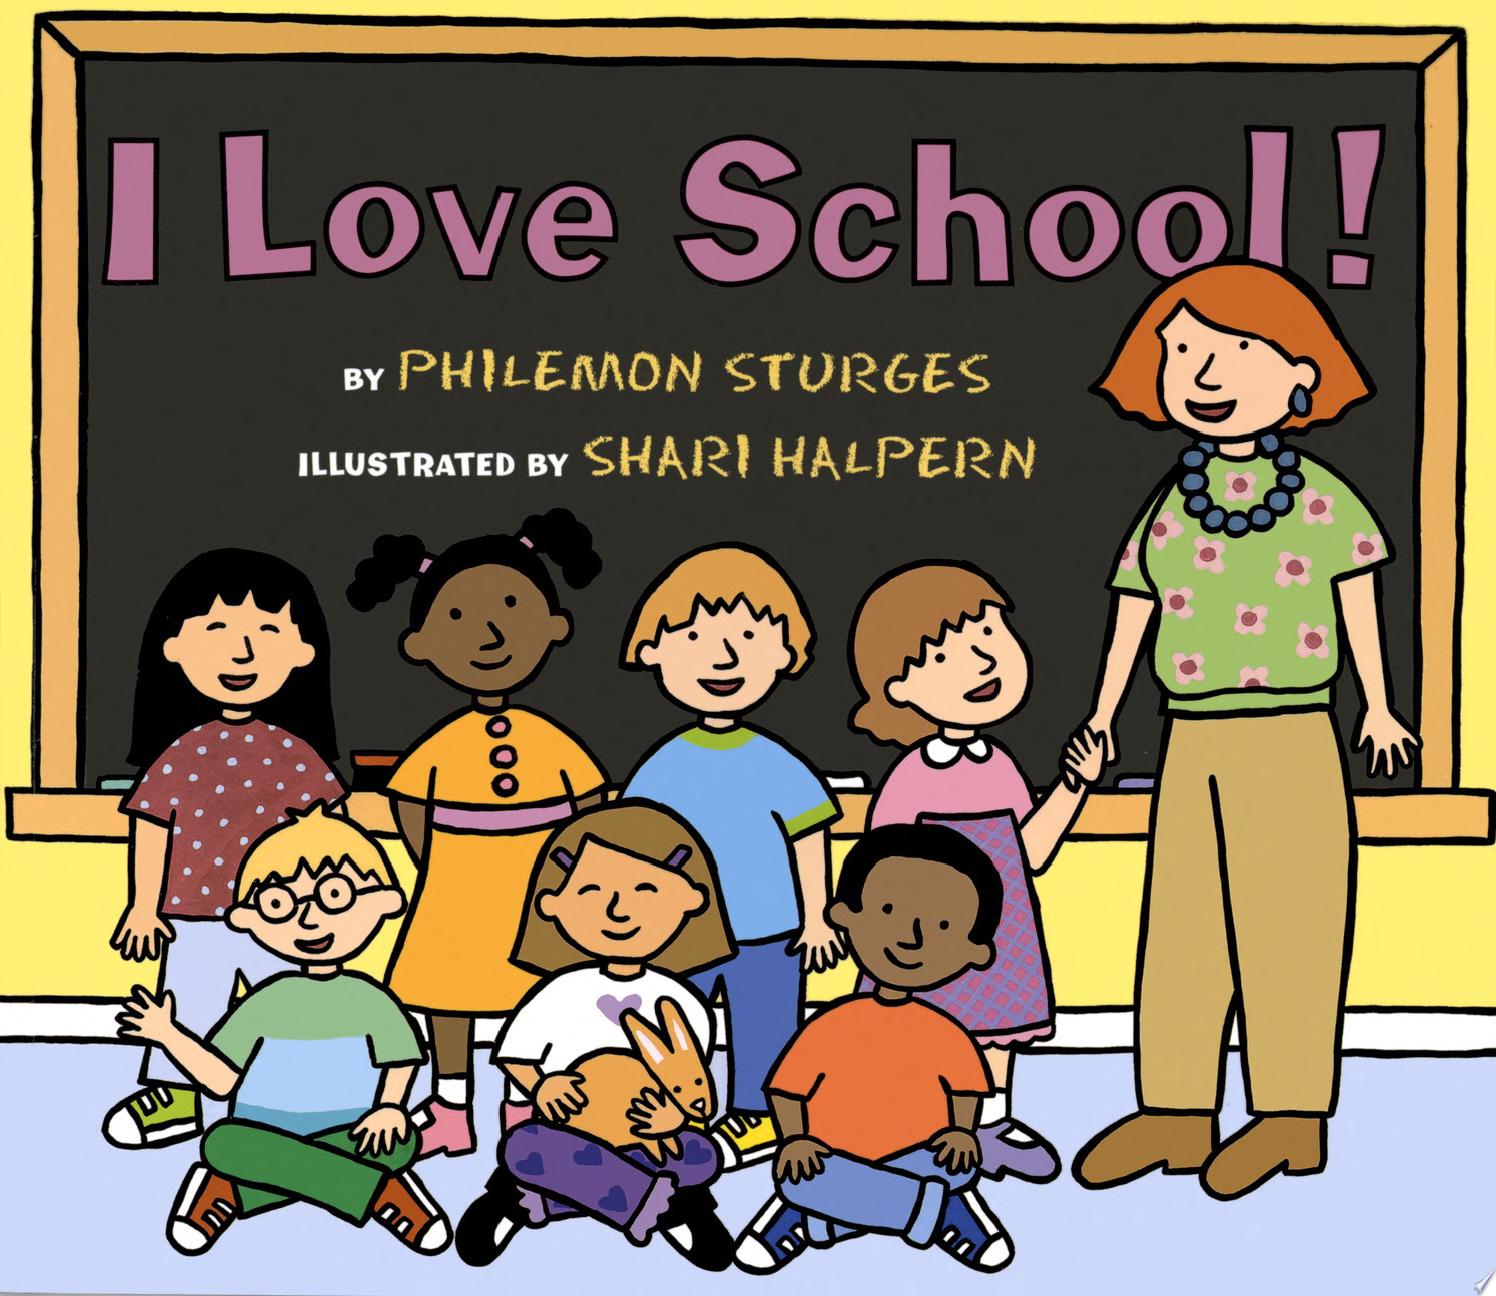 Image for "I Love School!"